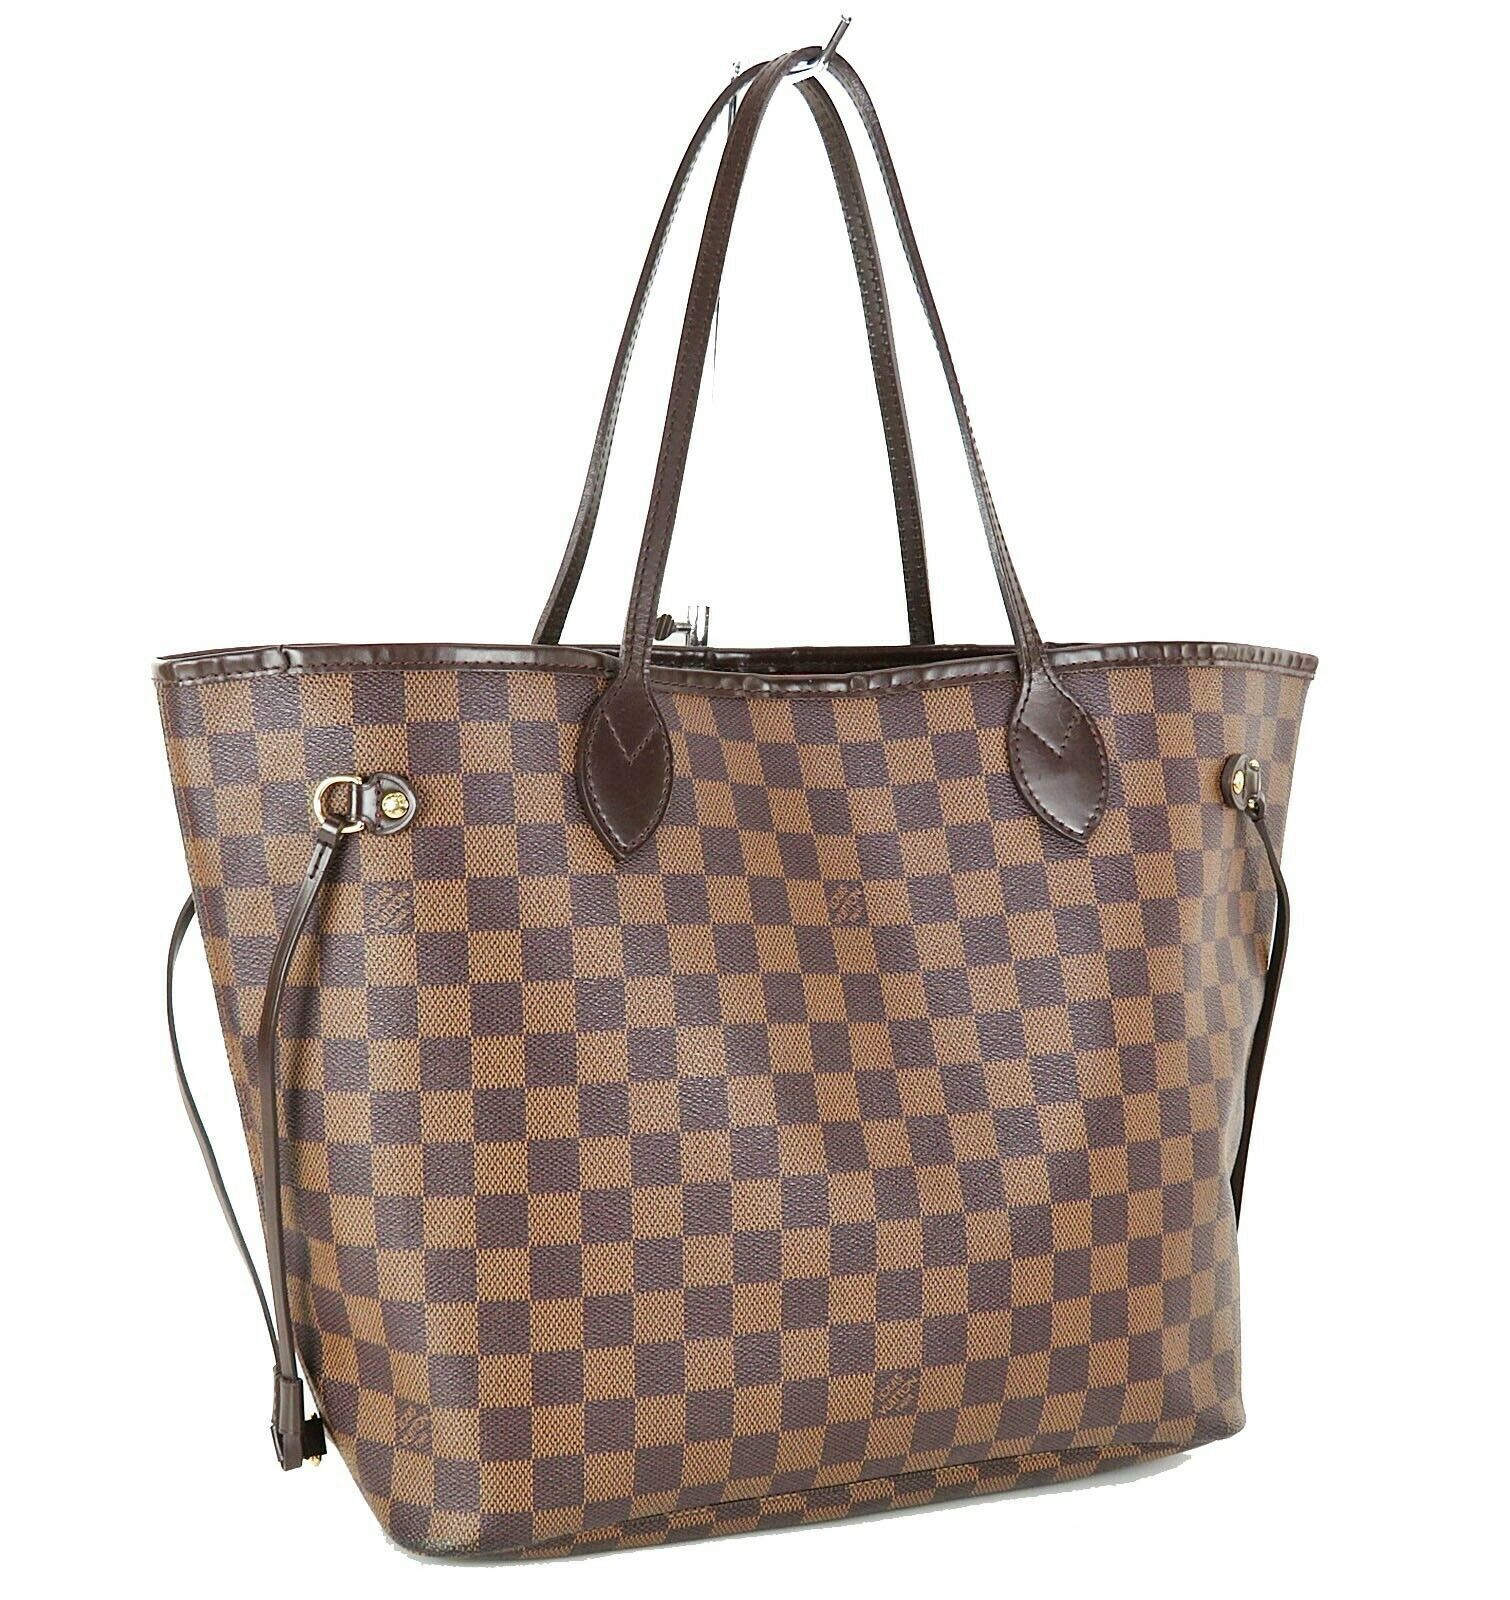 Authentic LOUIS VUITTON Neverfull MM Damier Ebene Tote Bag Purse #34370 - Women&#39;s Bags & Handbags